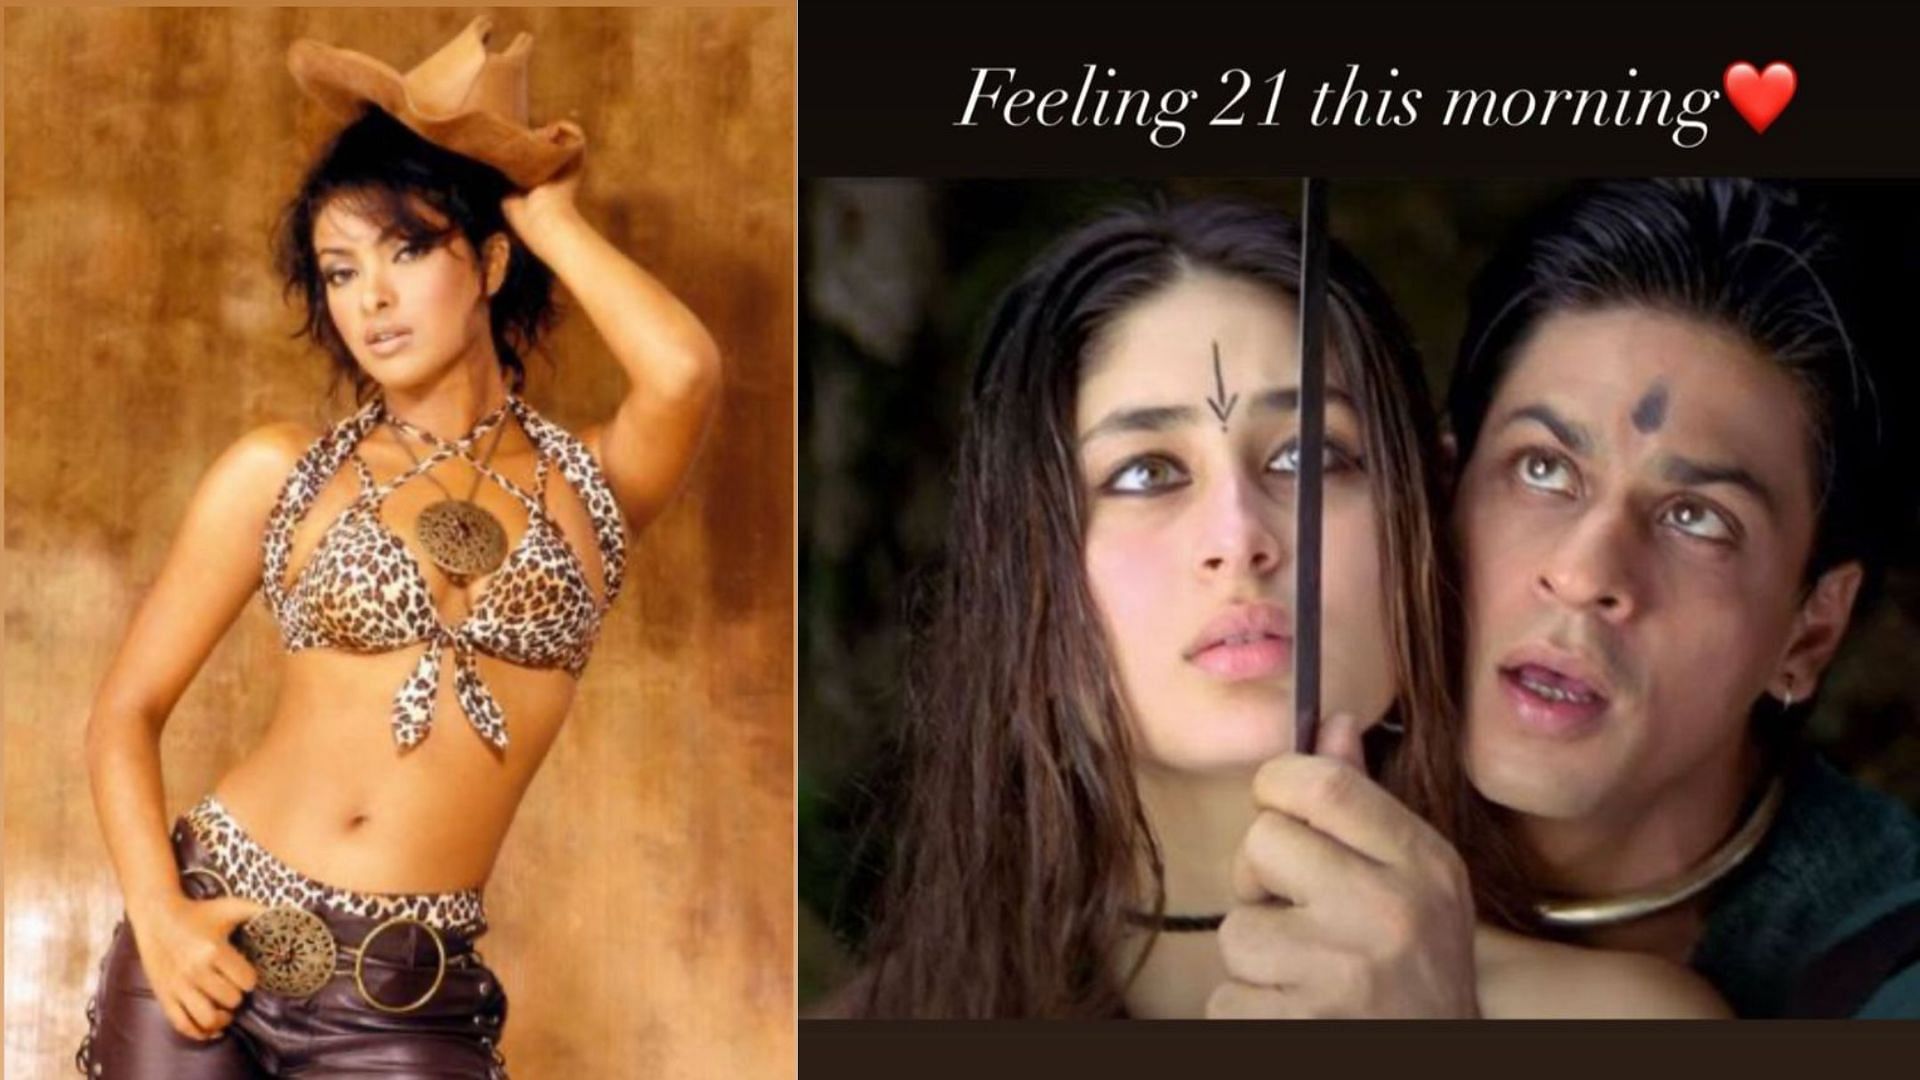 <div class="paragraphs"><p>Priyanka Chopra, Kareena Kapoor join the 'Let's see you at 21' trend.</p></div>